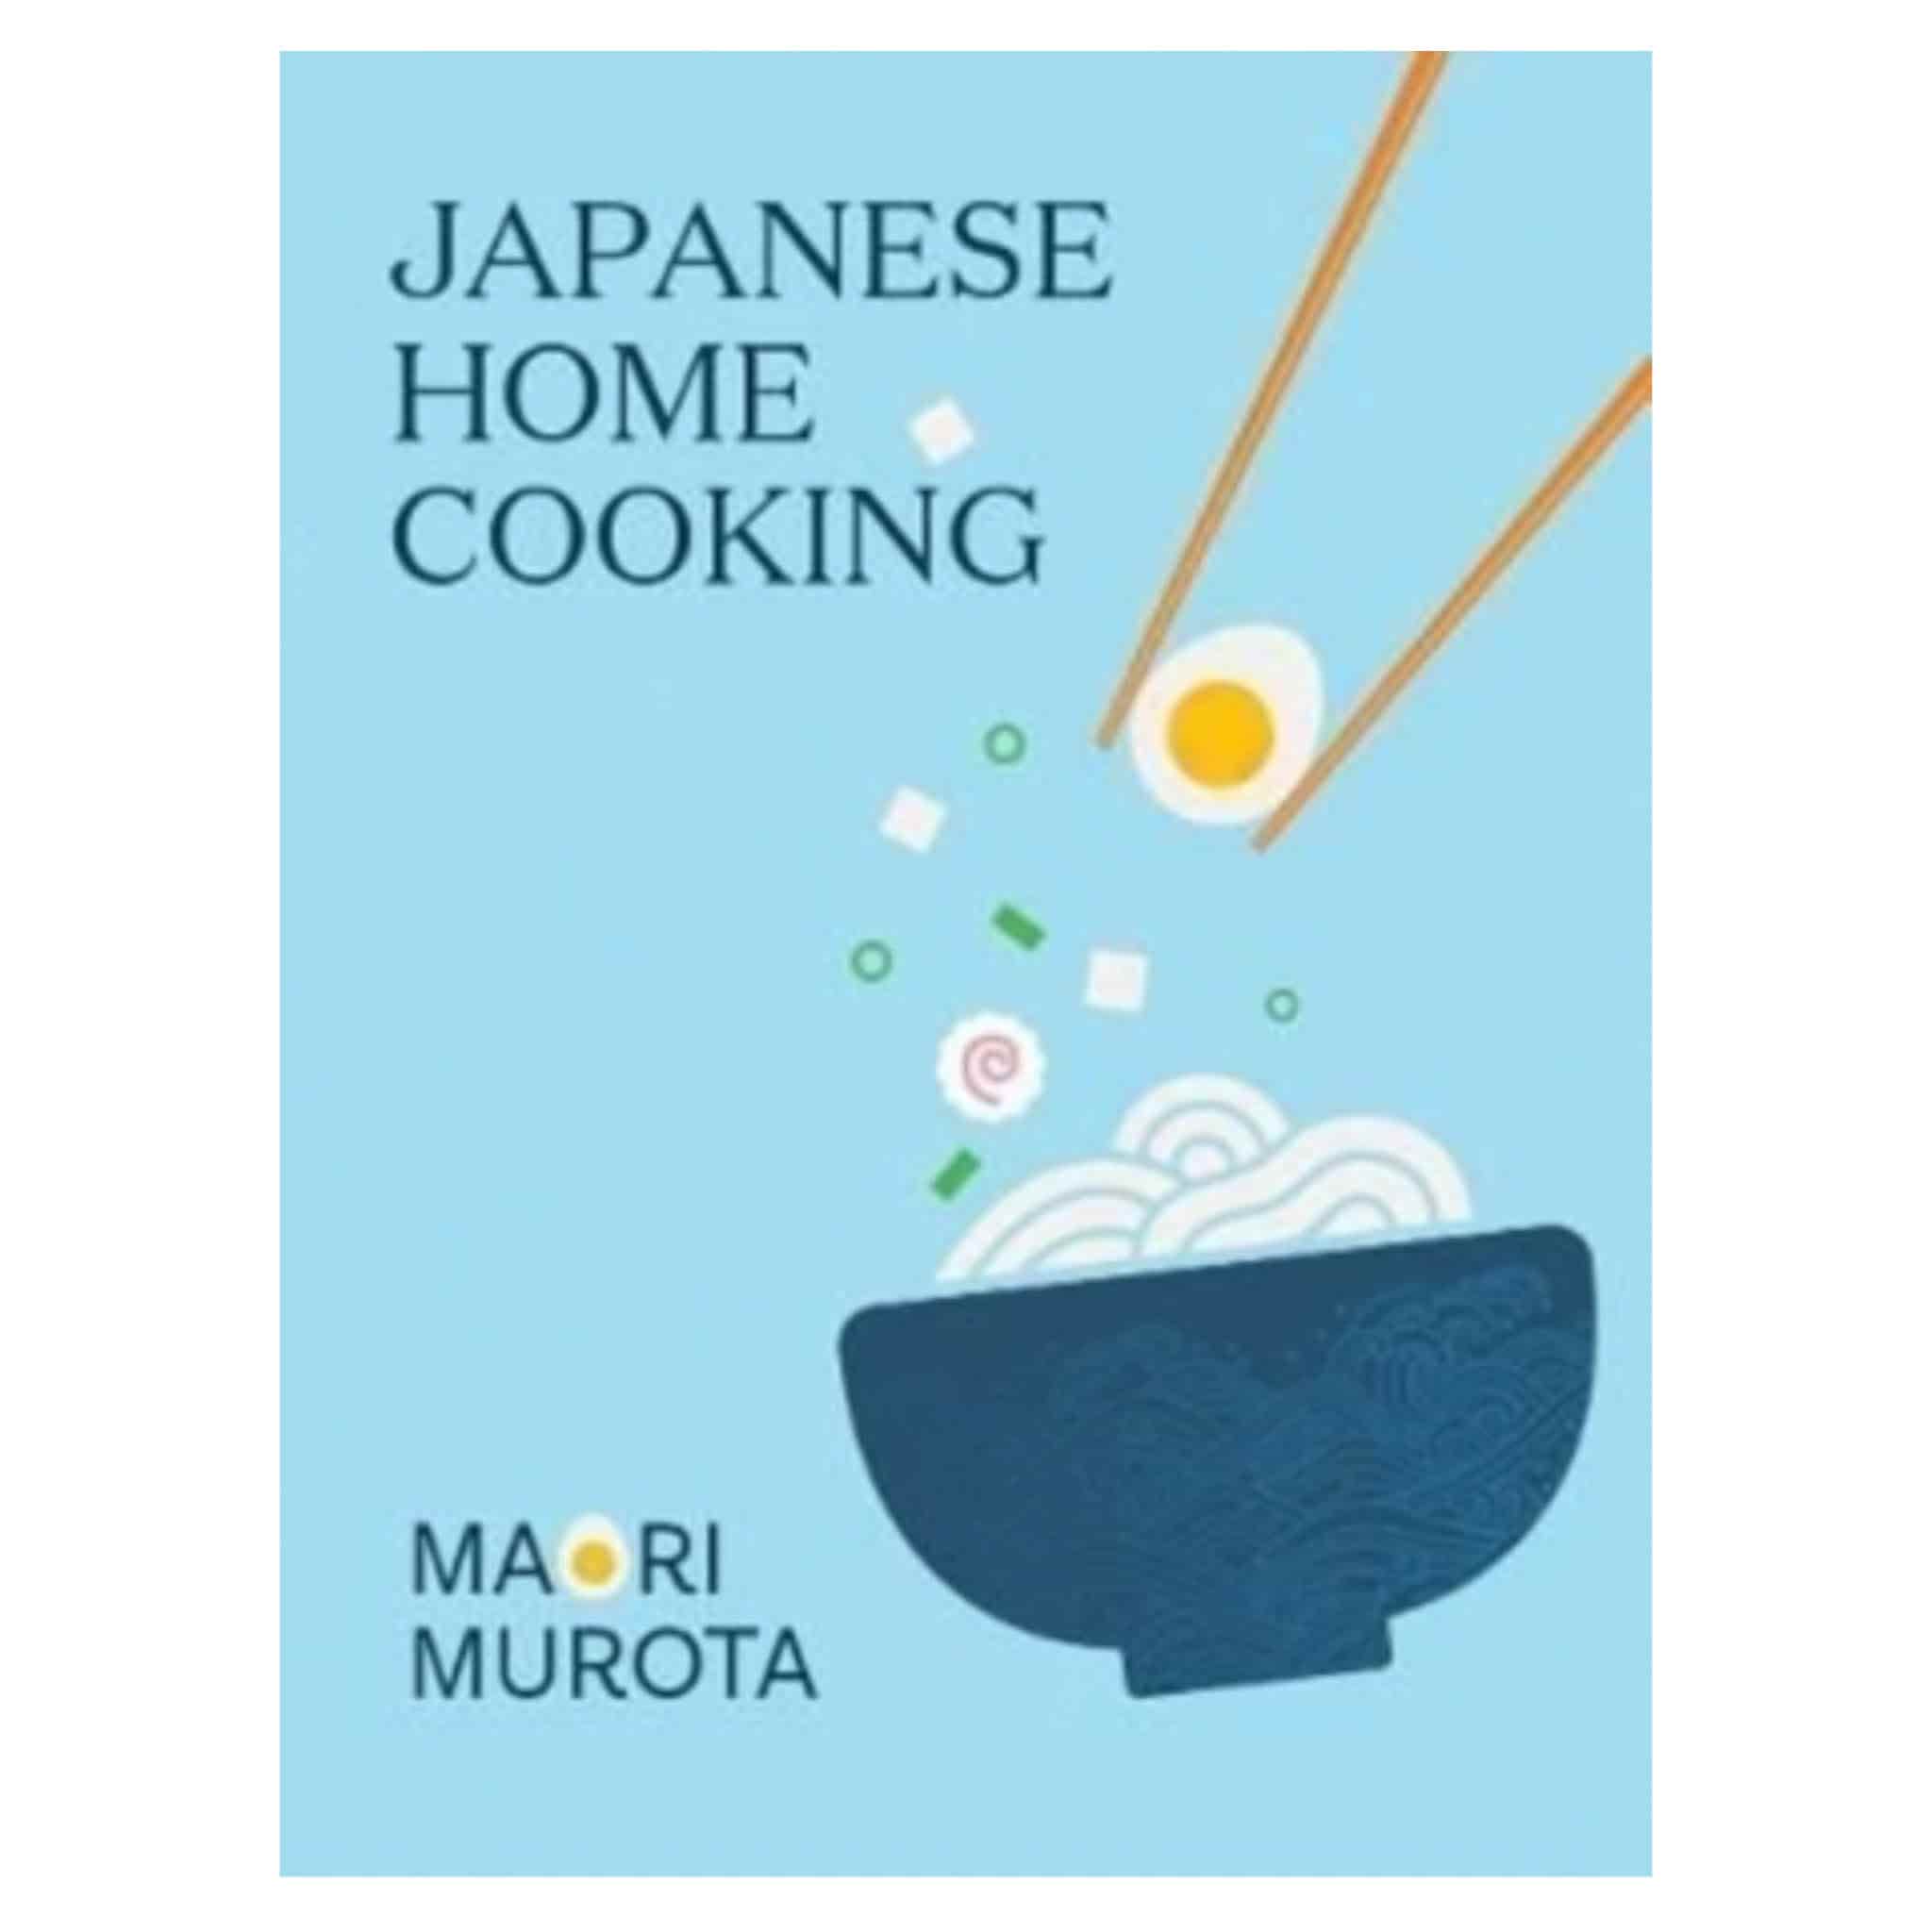 Japanese Home Cooking, by Maori Murota